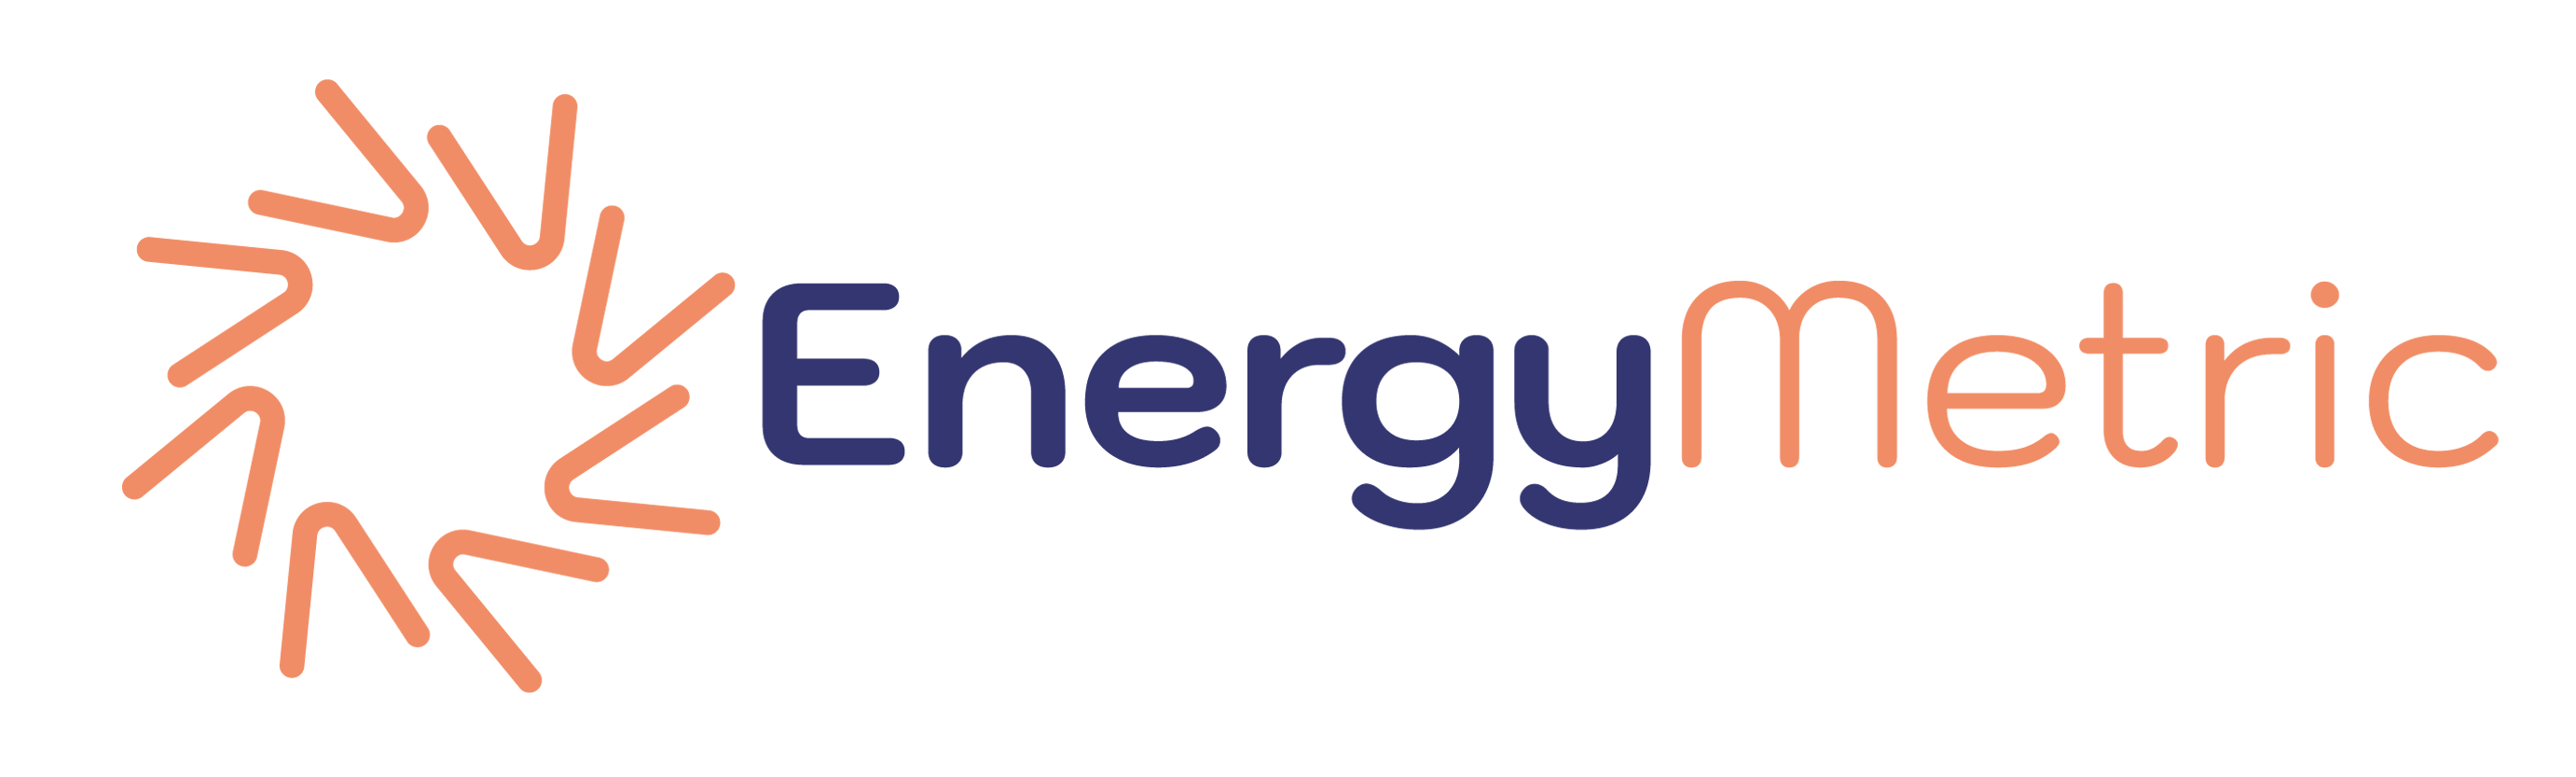 EnergyMetric-logo